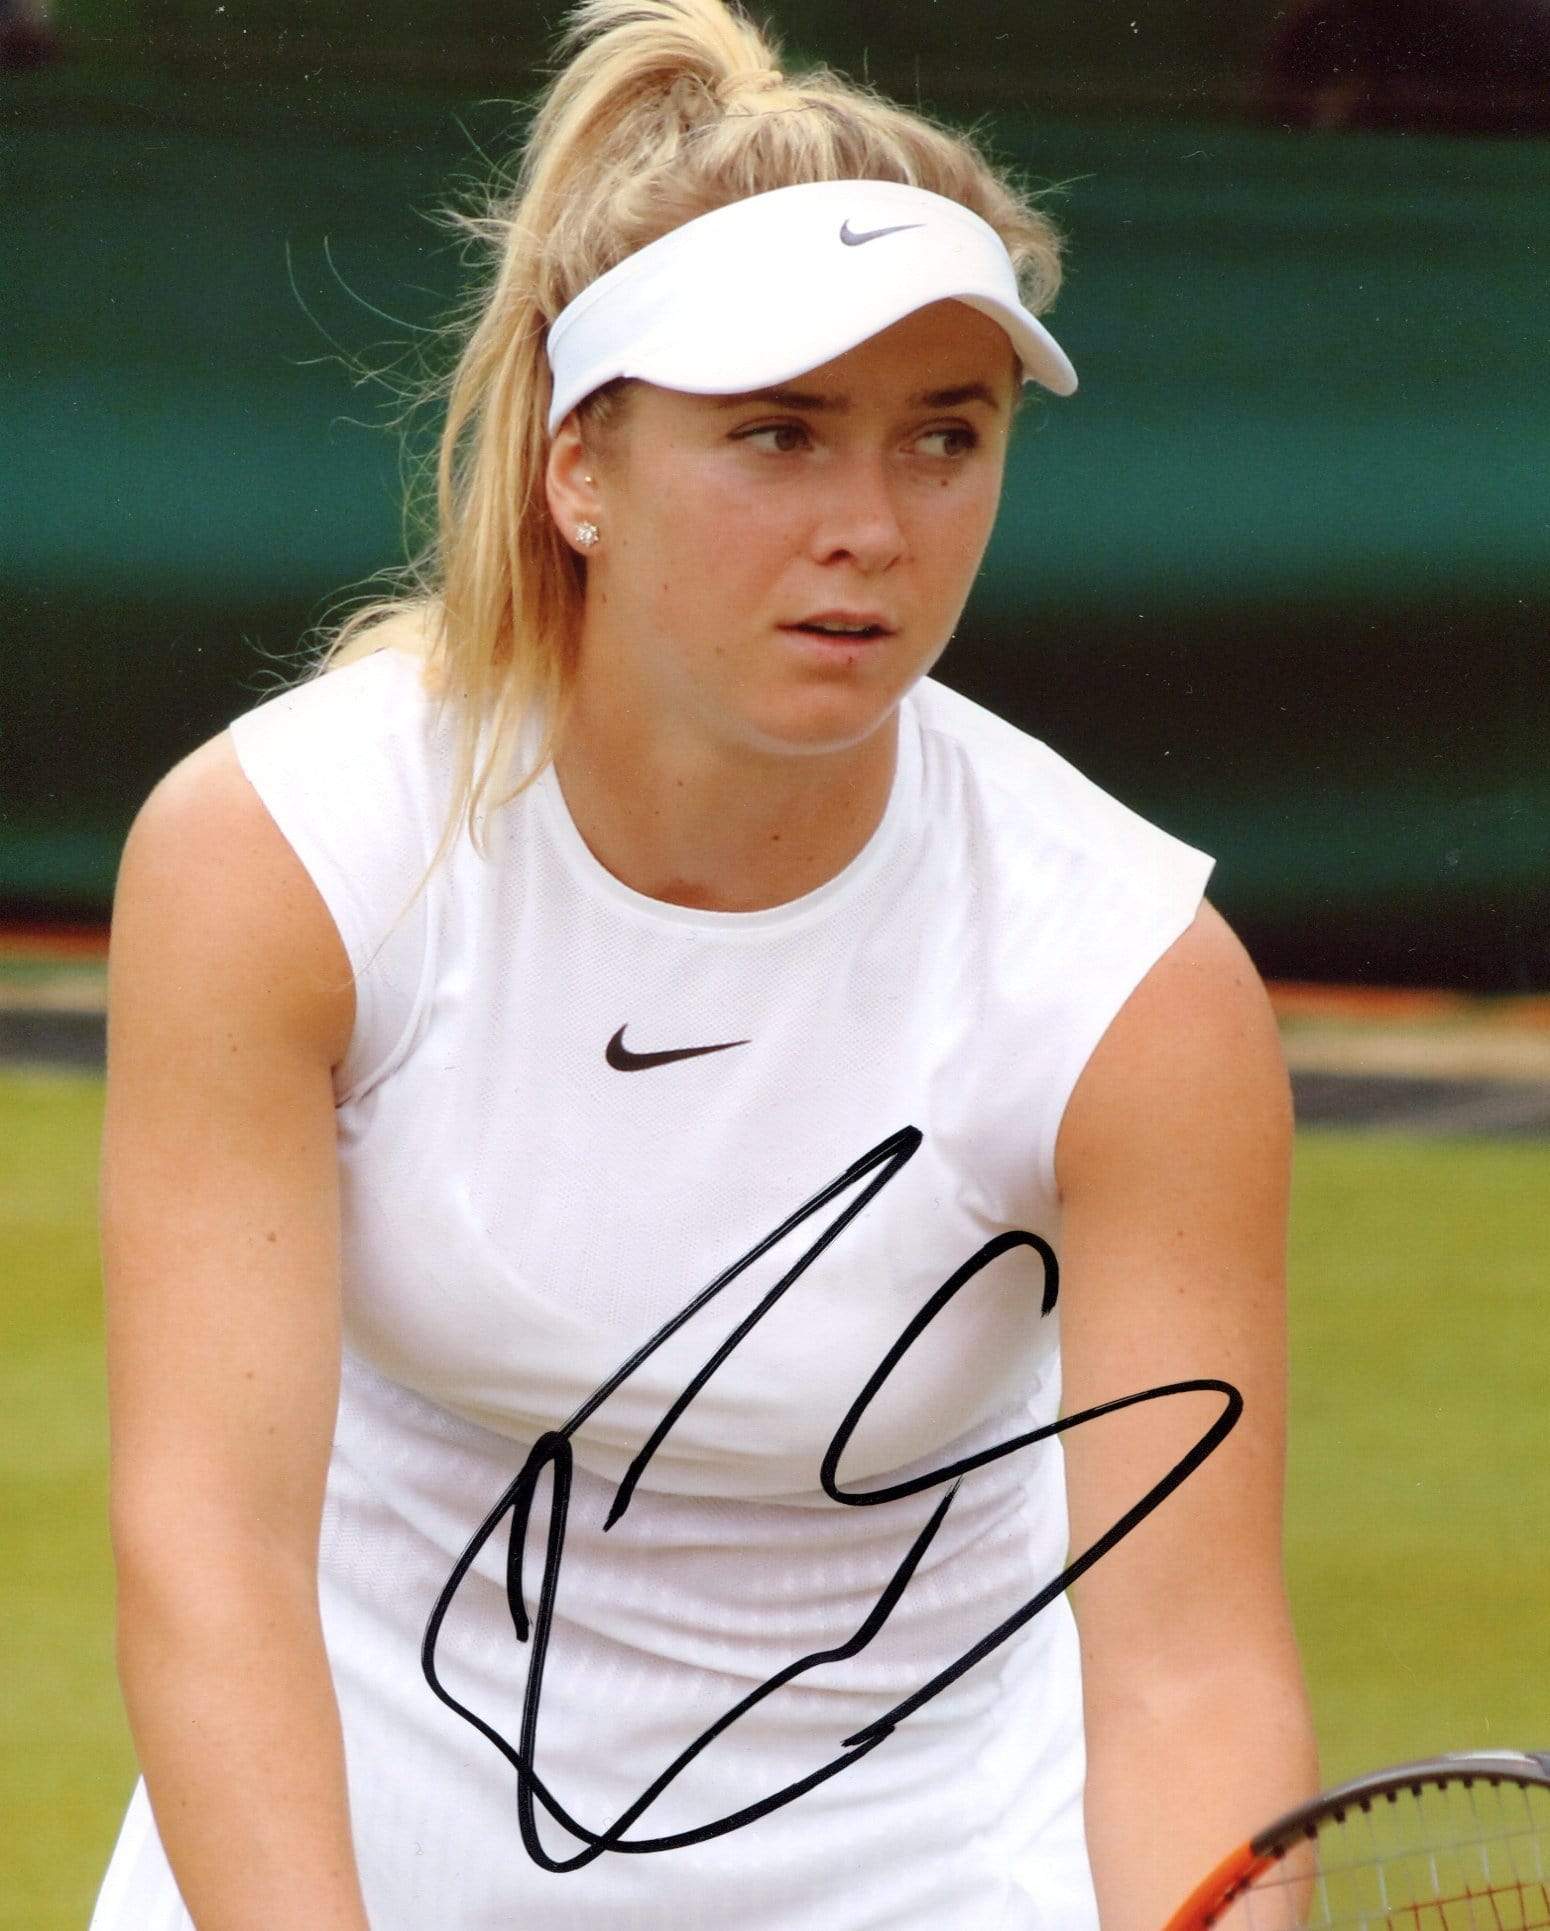 Elina  Svitolina Autograph Autogramm | ID 7062011674773